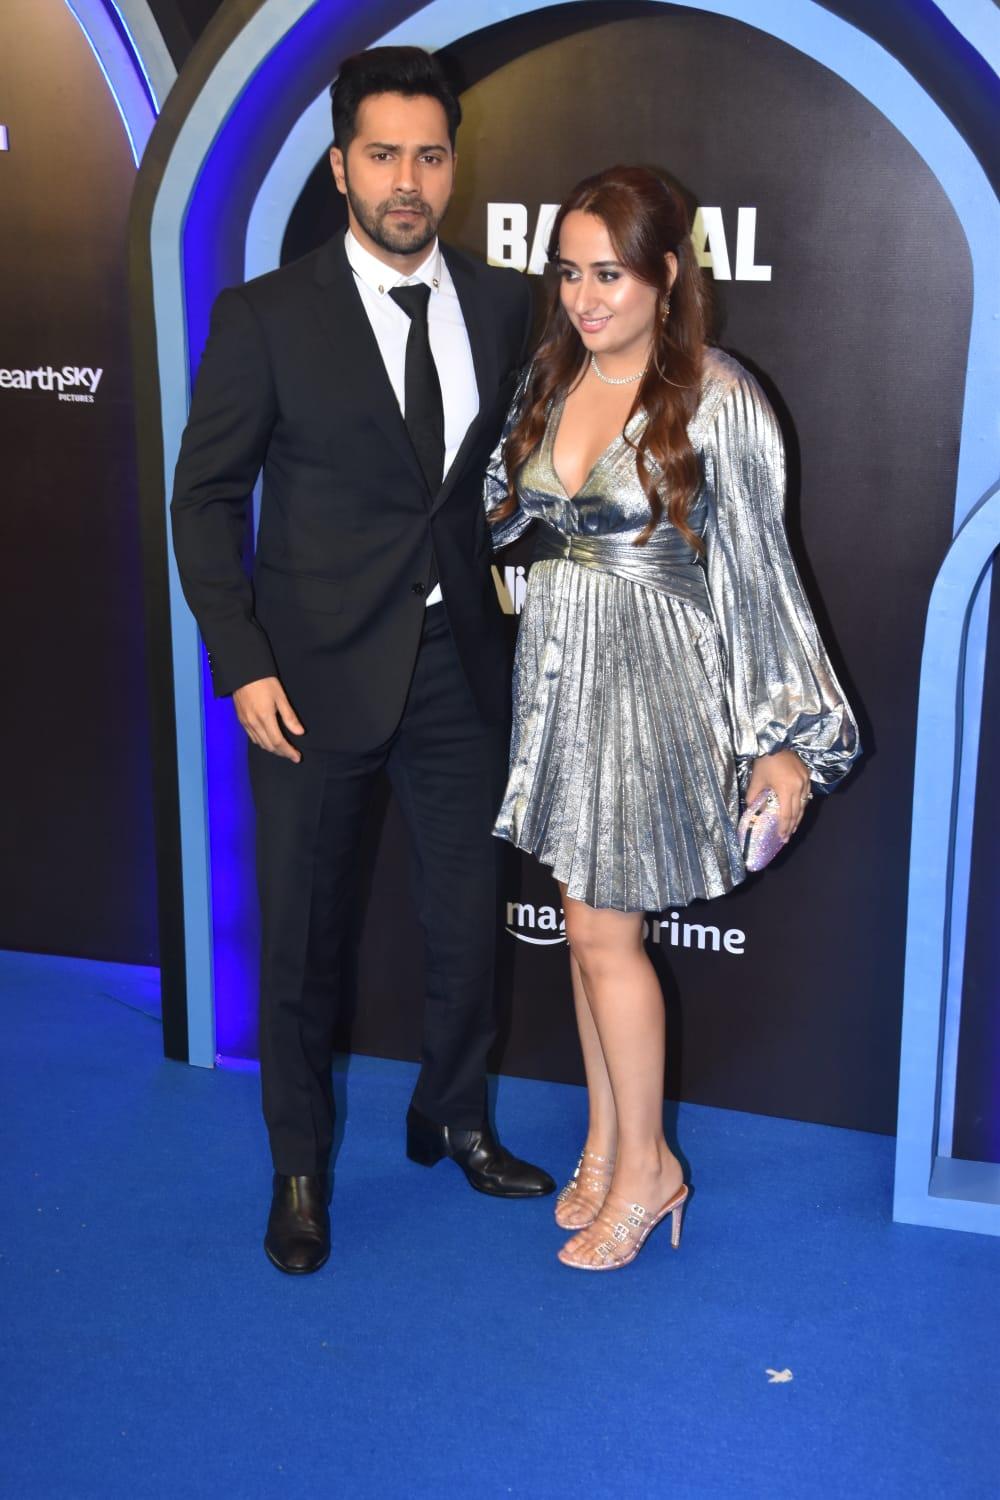 Varun Dhawan and wife Natasha Dalal at their stylish best